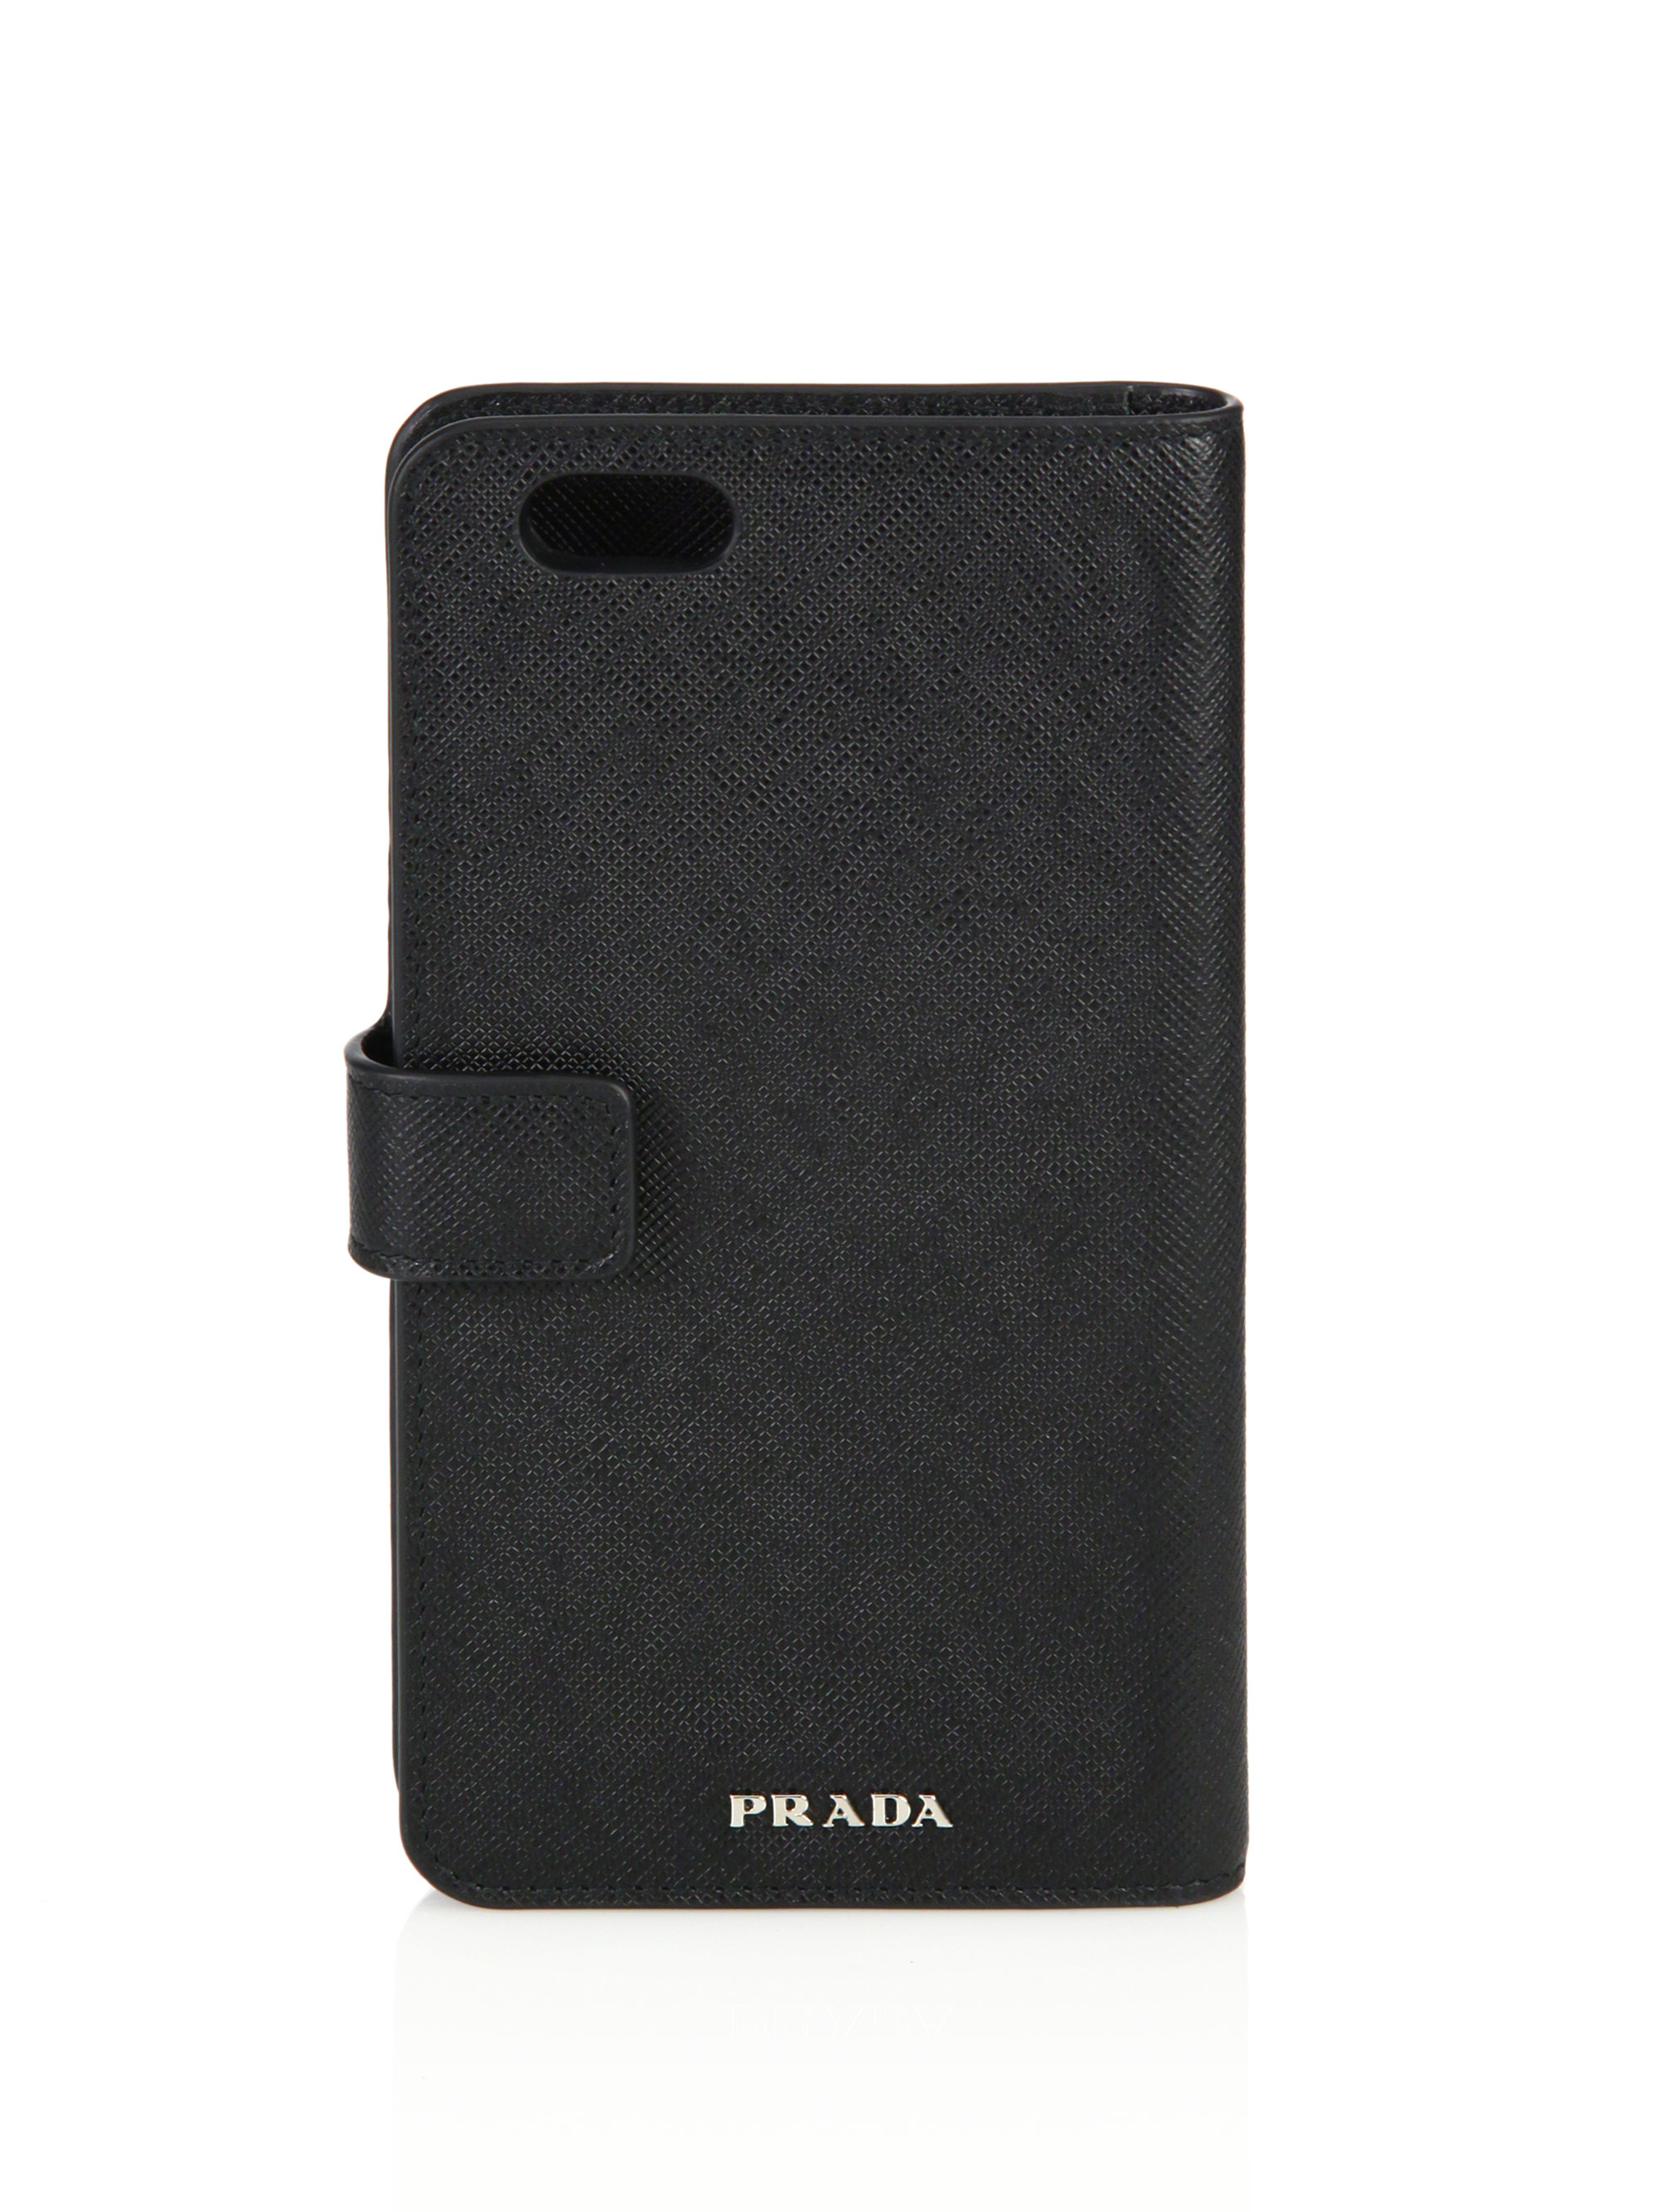 prada iphone wallet case